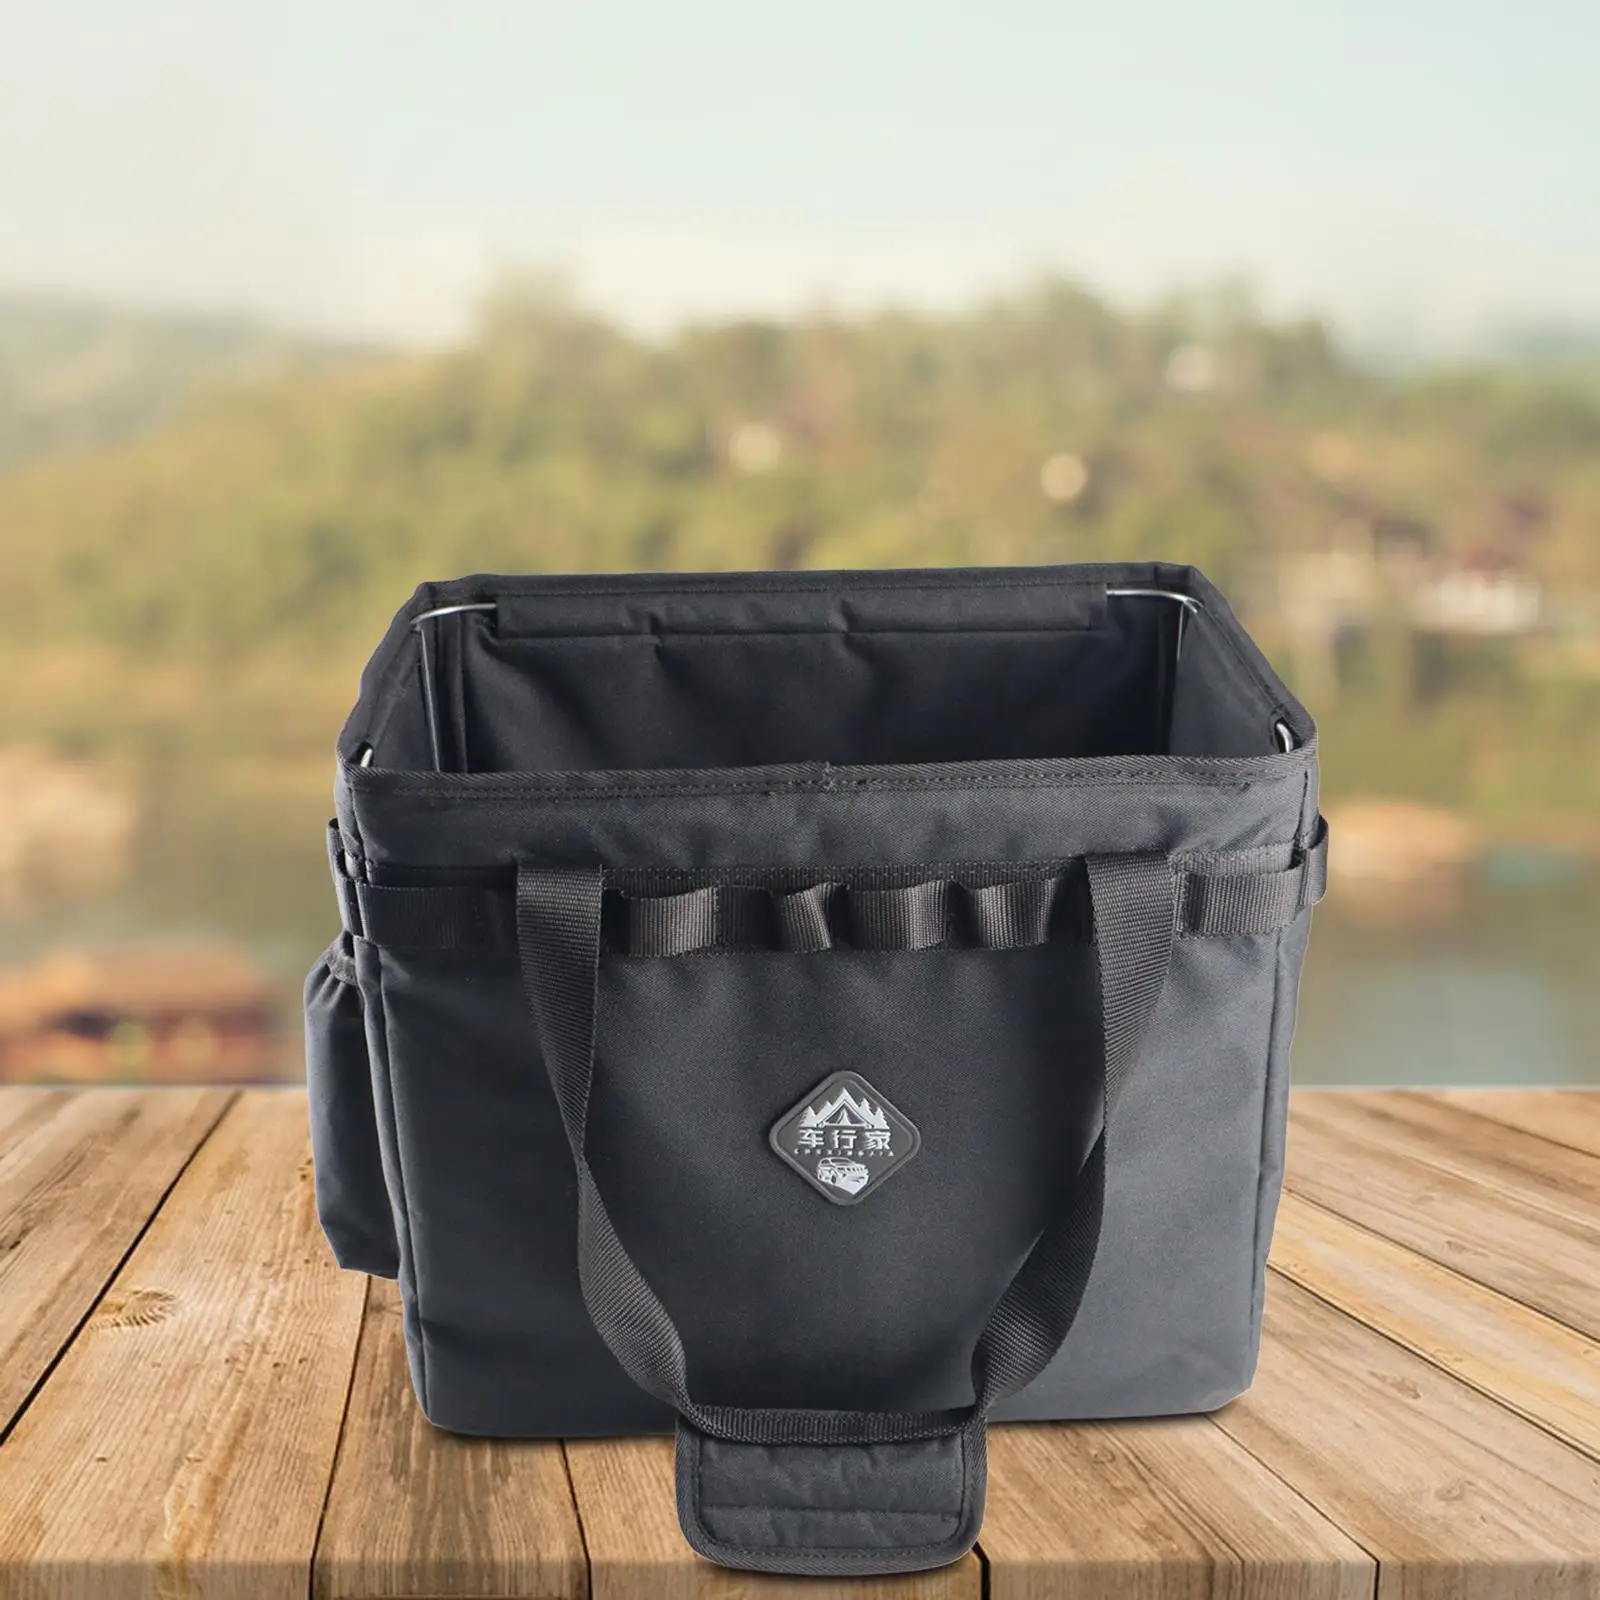 Travel Duffel Utility Tote Bag Handbag Collapsible Camping Gear Storage Bag